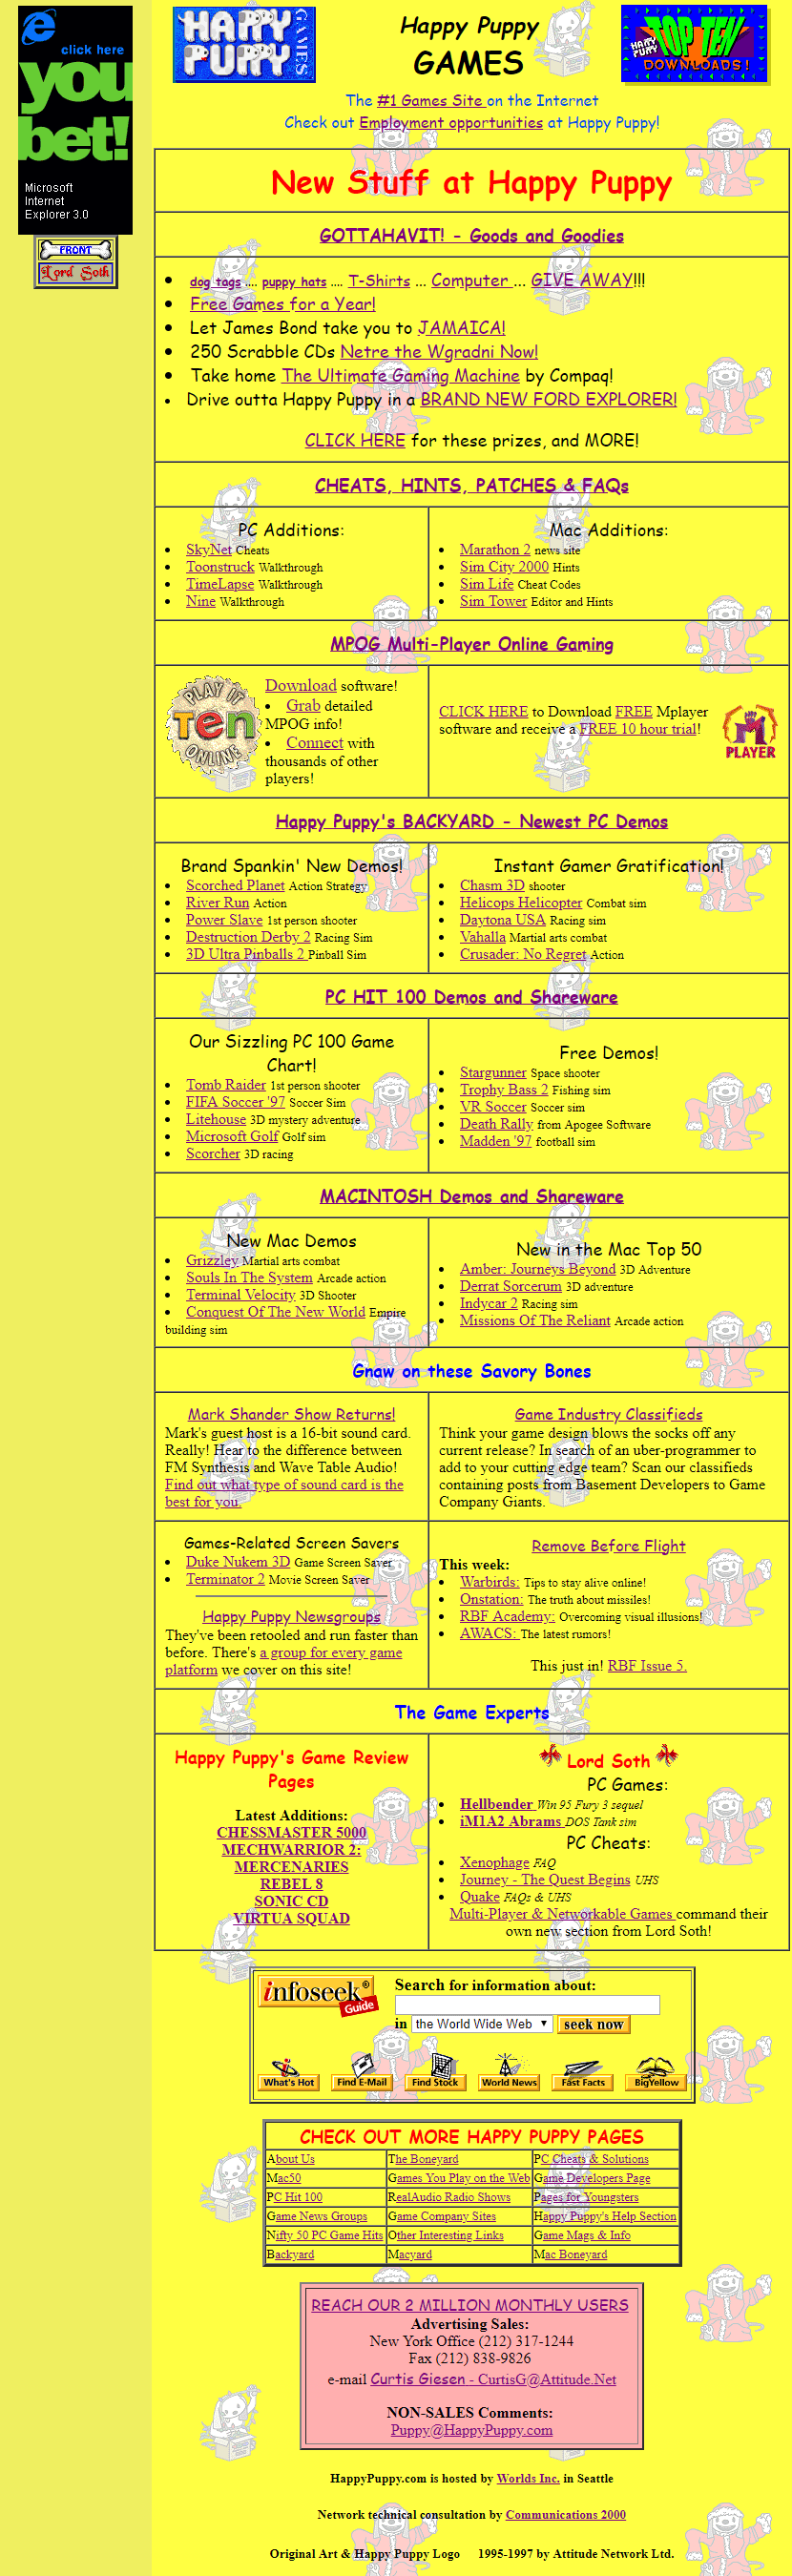 Happy Puppy website in 1996